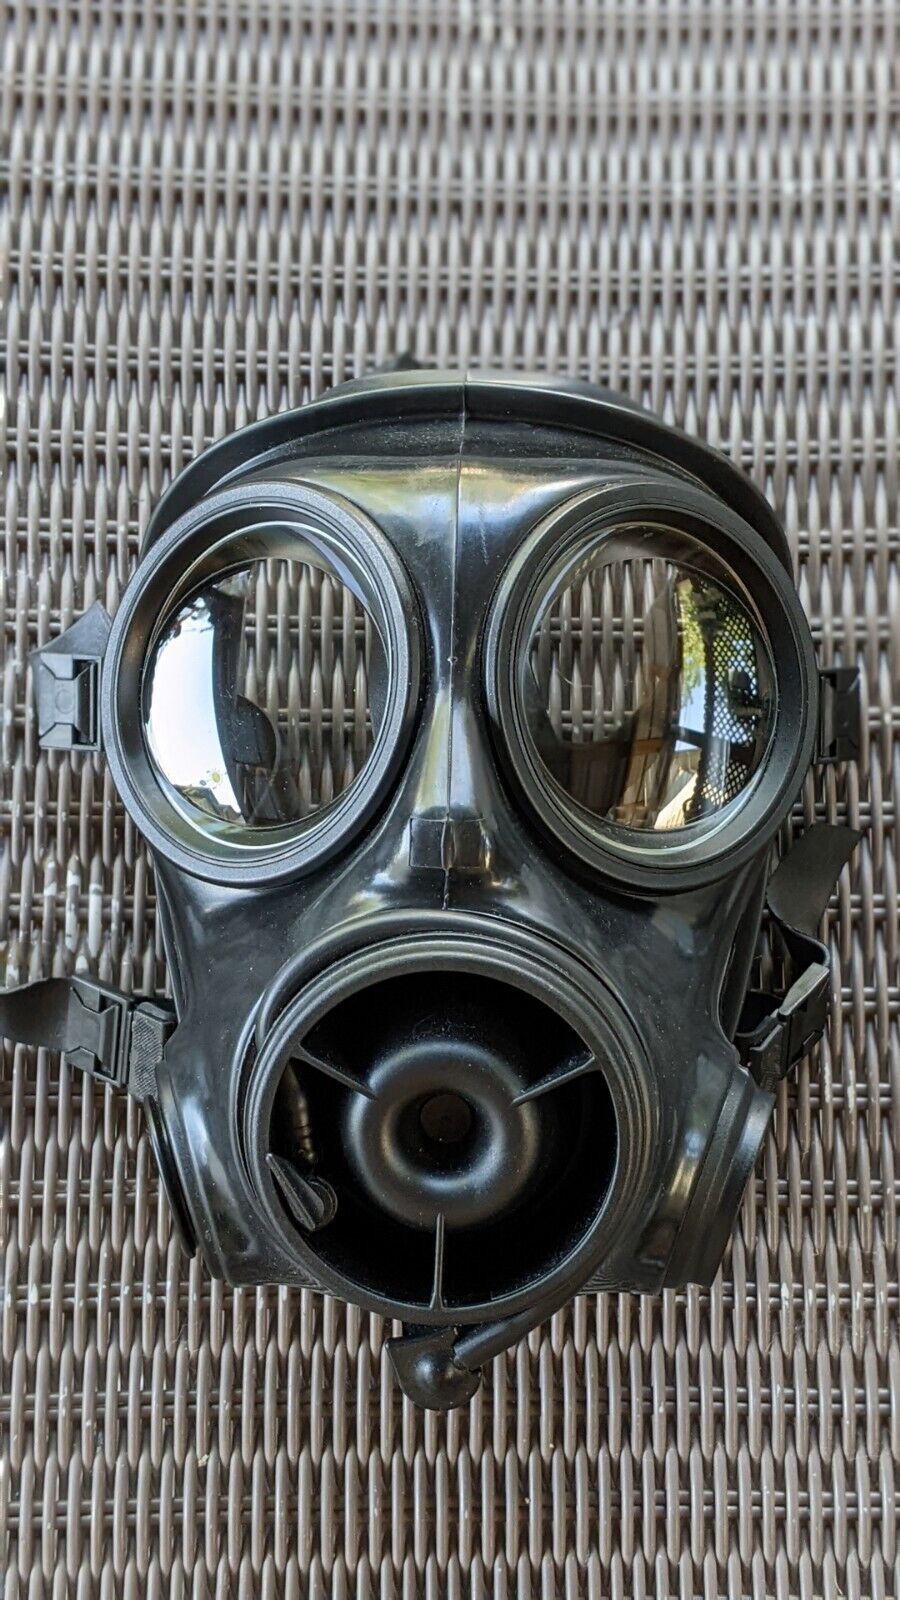 Avon S10 Gas Mask Size 2